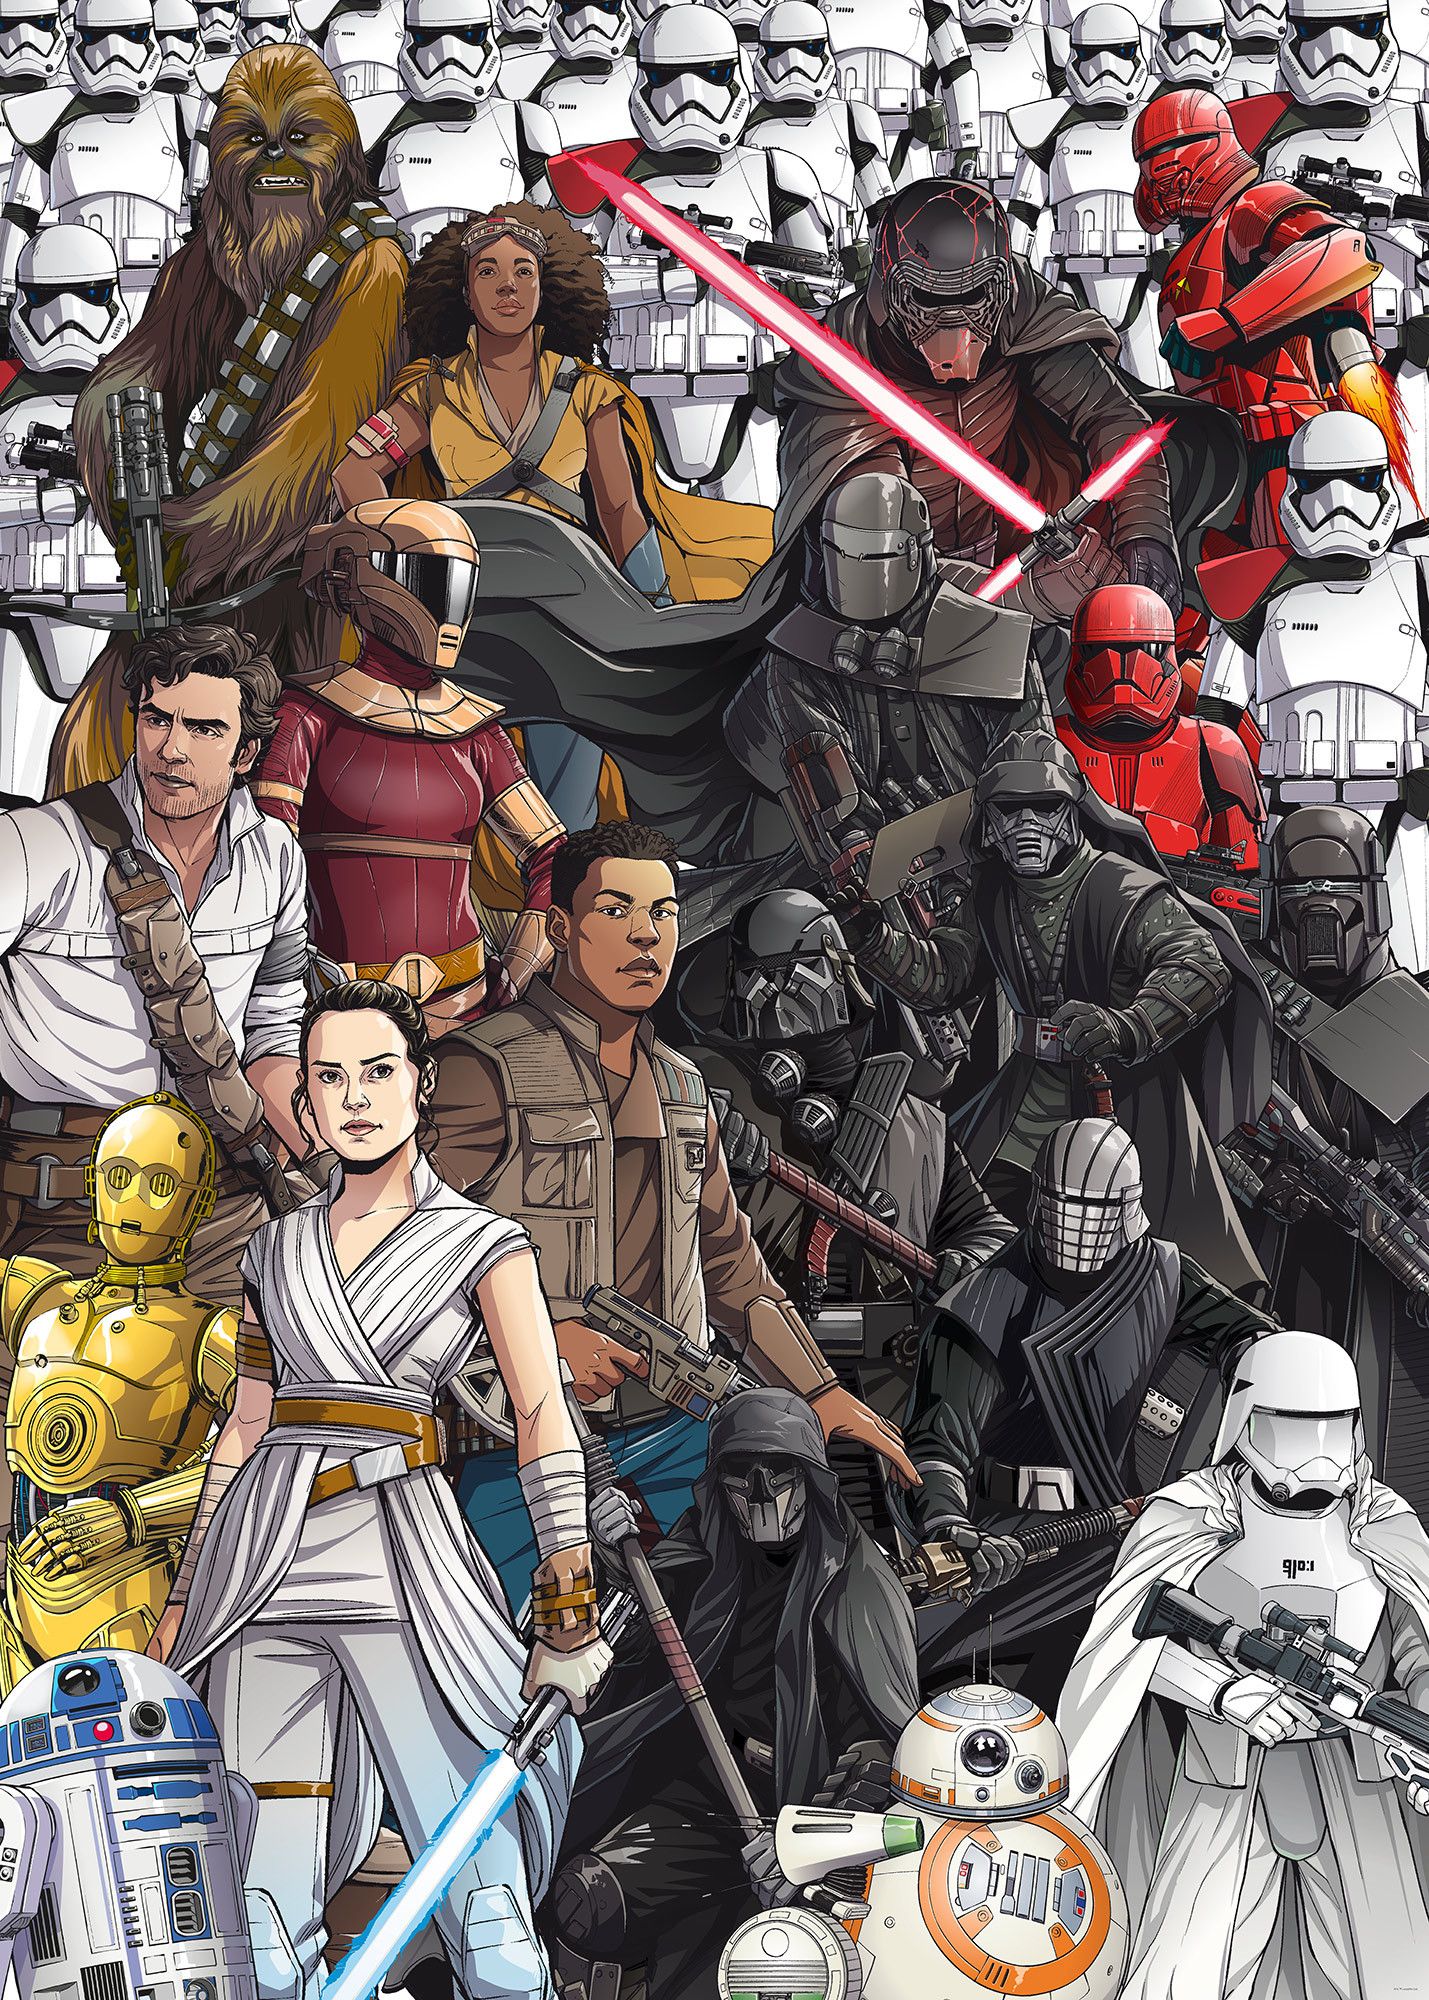 Cool Star Wars Cartoon Wallpapers